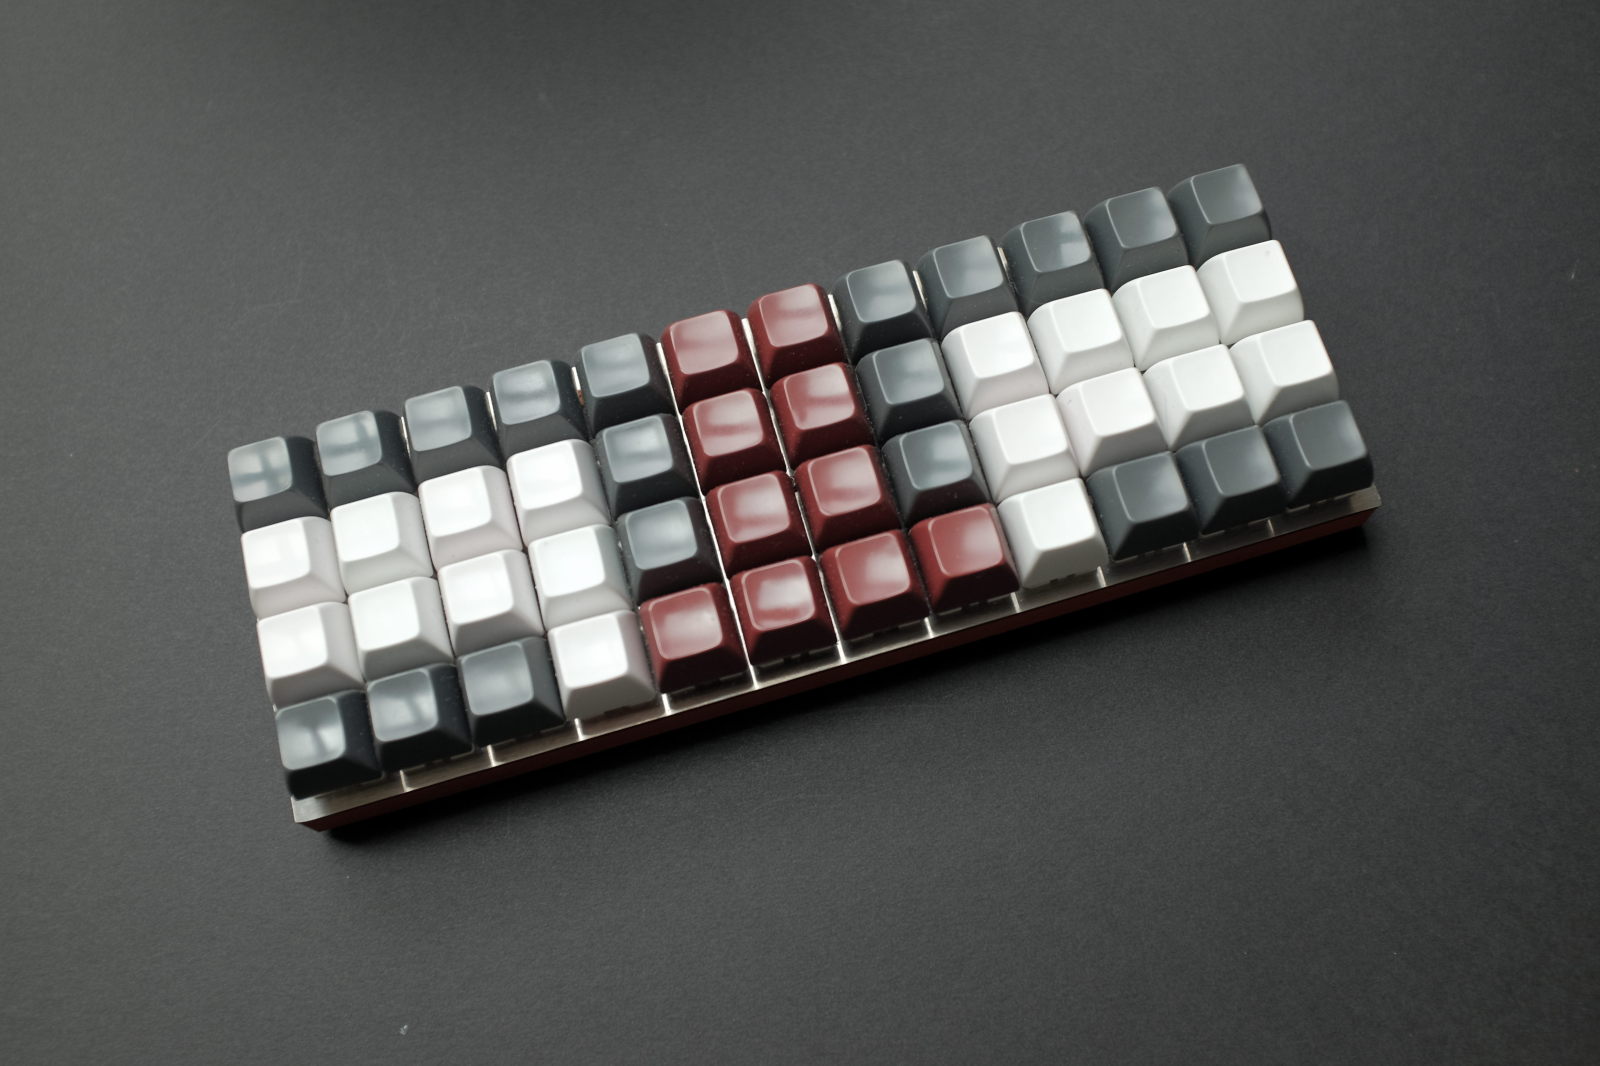 Split Planck with</span> cherry profile keys